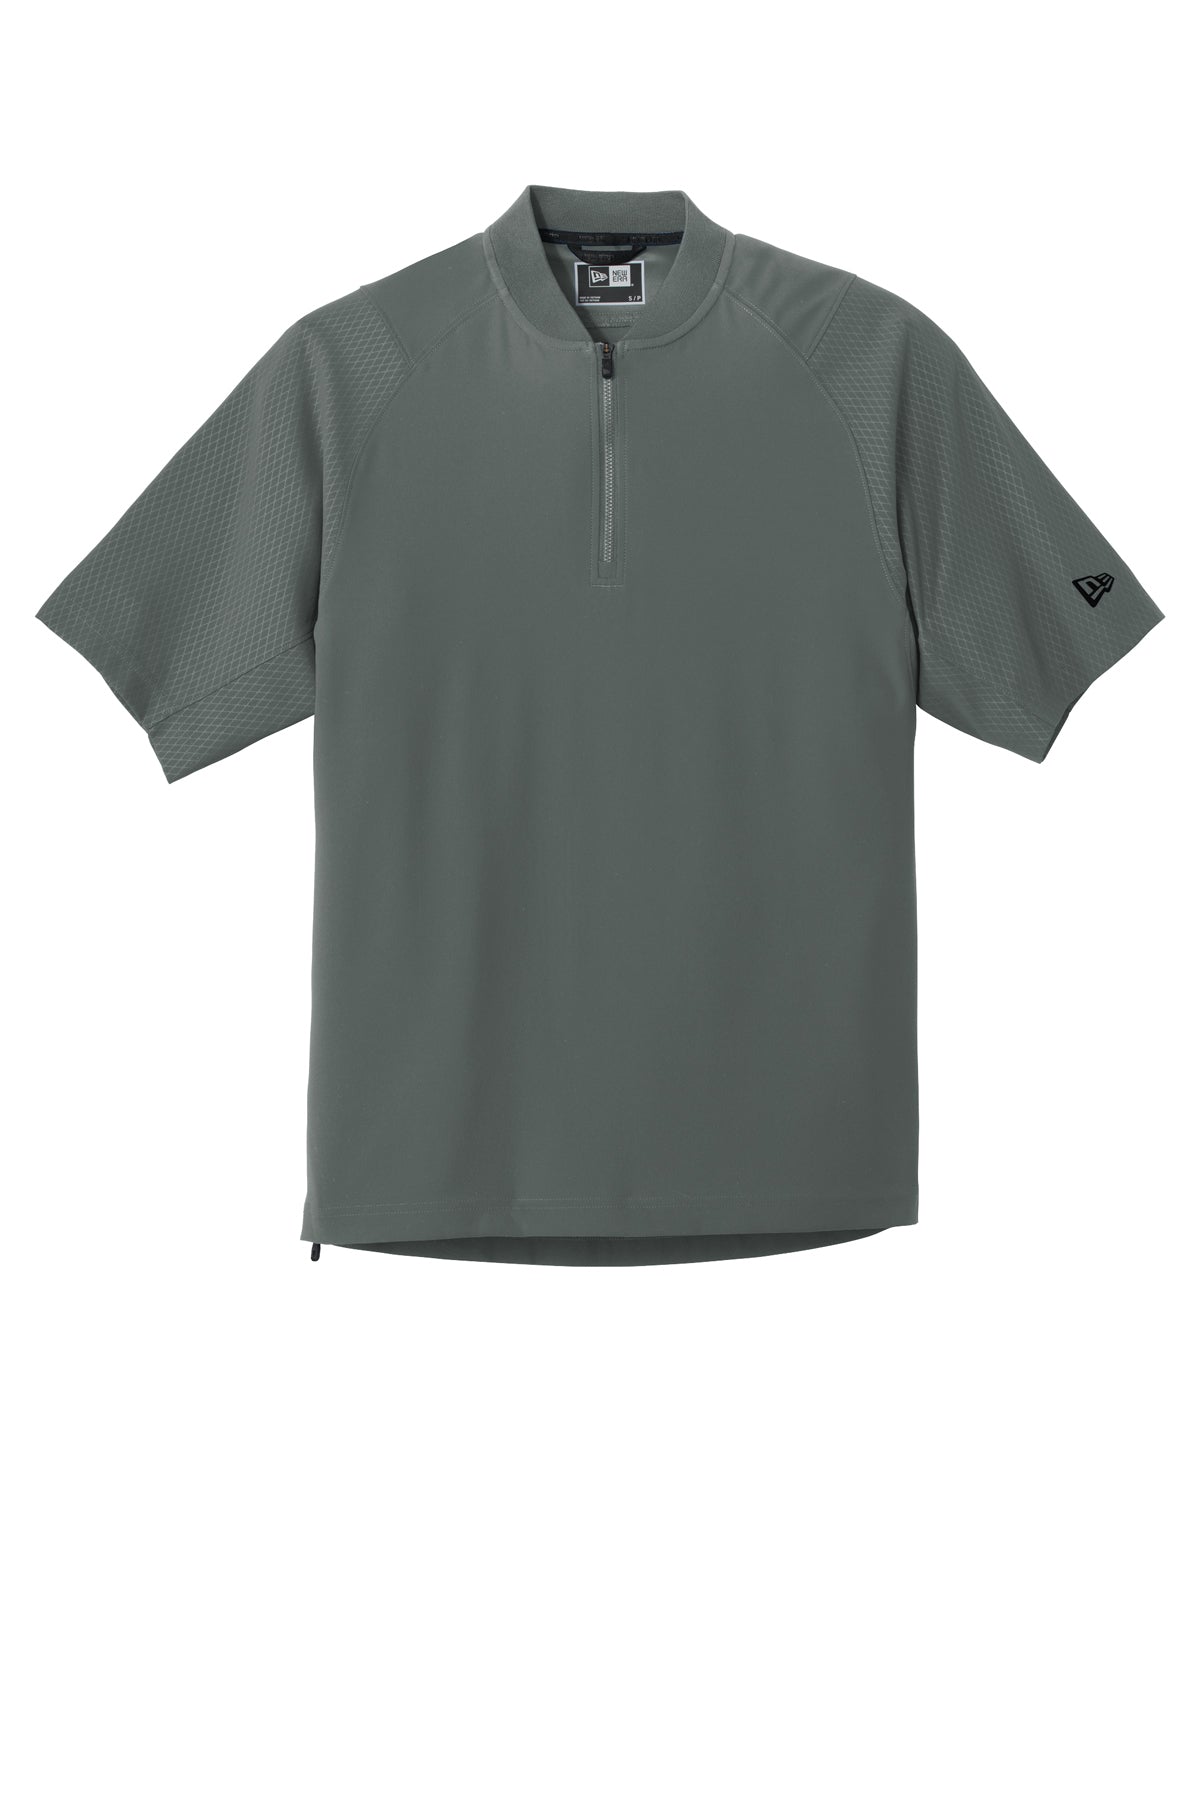 Windsor - Softball - New Era Cage Short Sleeve 1/4-Zip Jacket (NEA600) - Southern Grace Creations